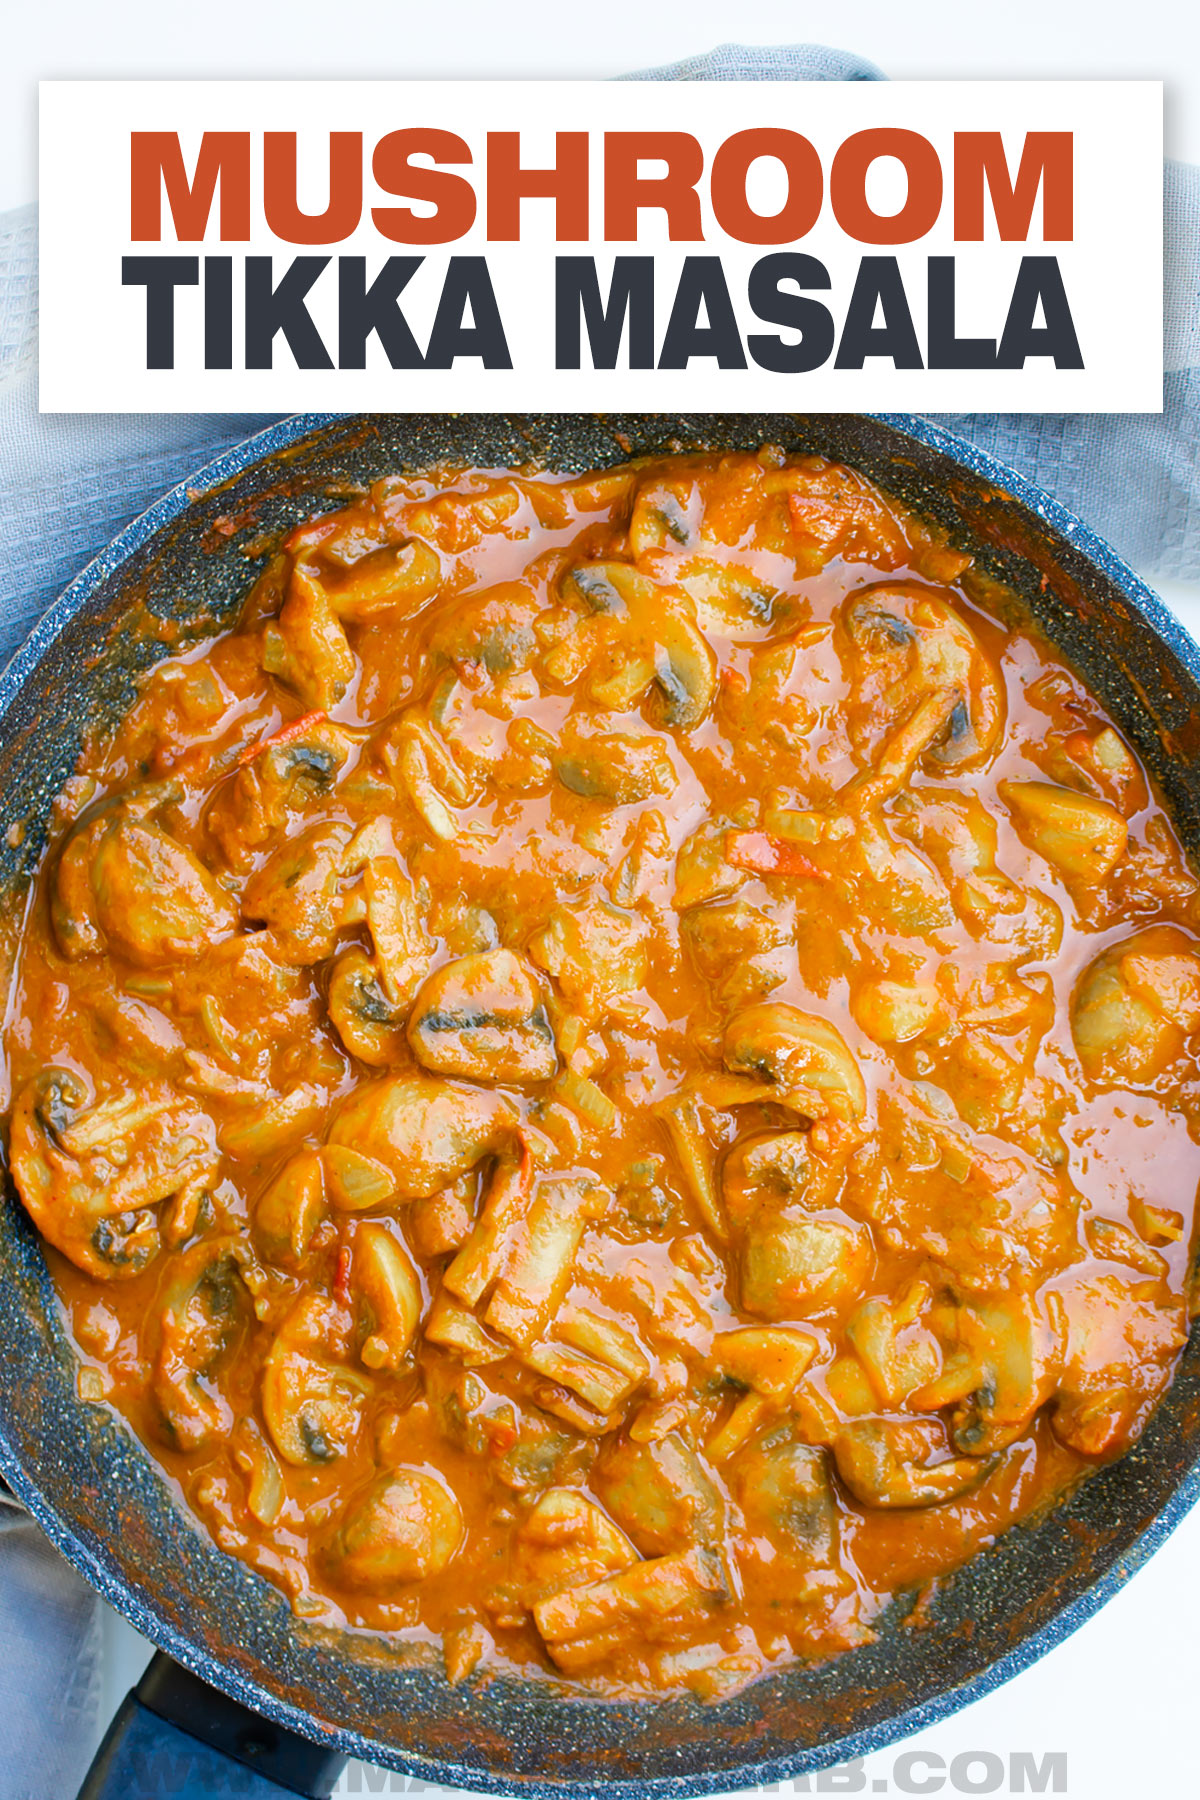 Mushroom Tikka Masala Recipe cover image